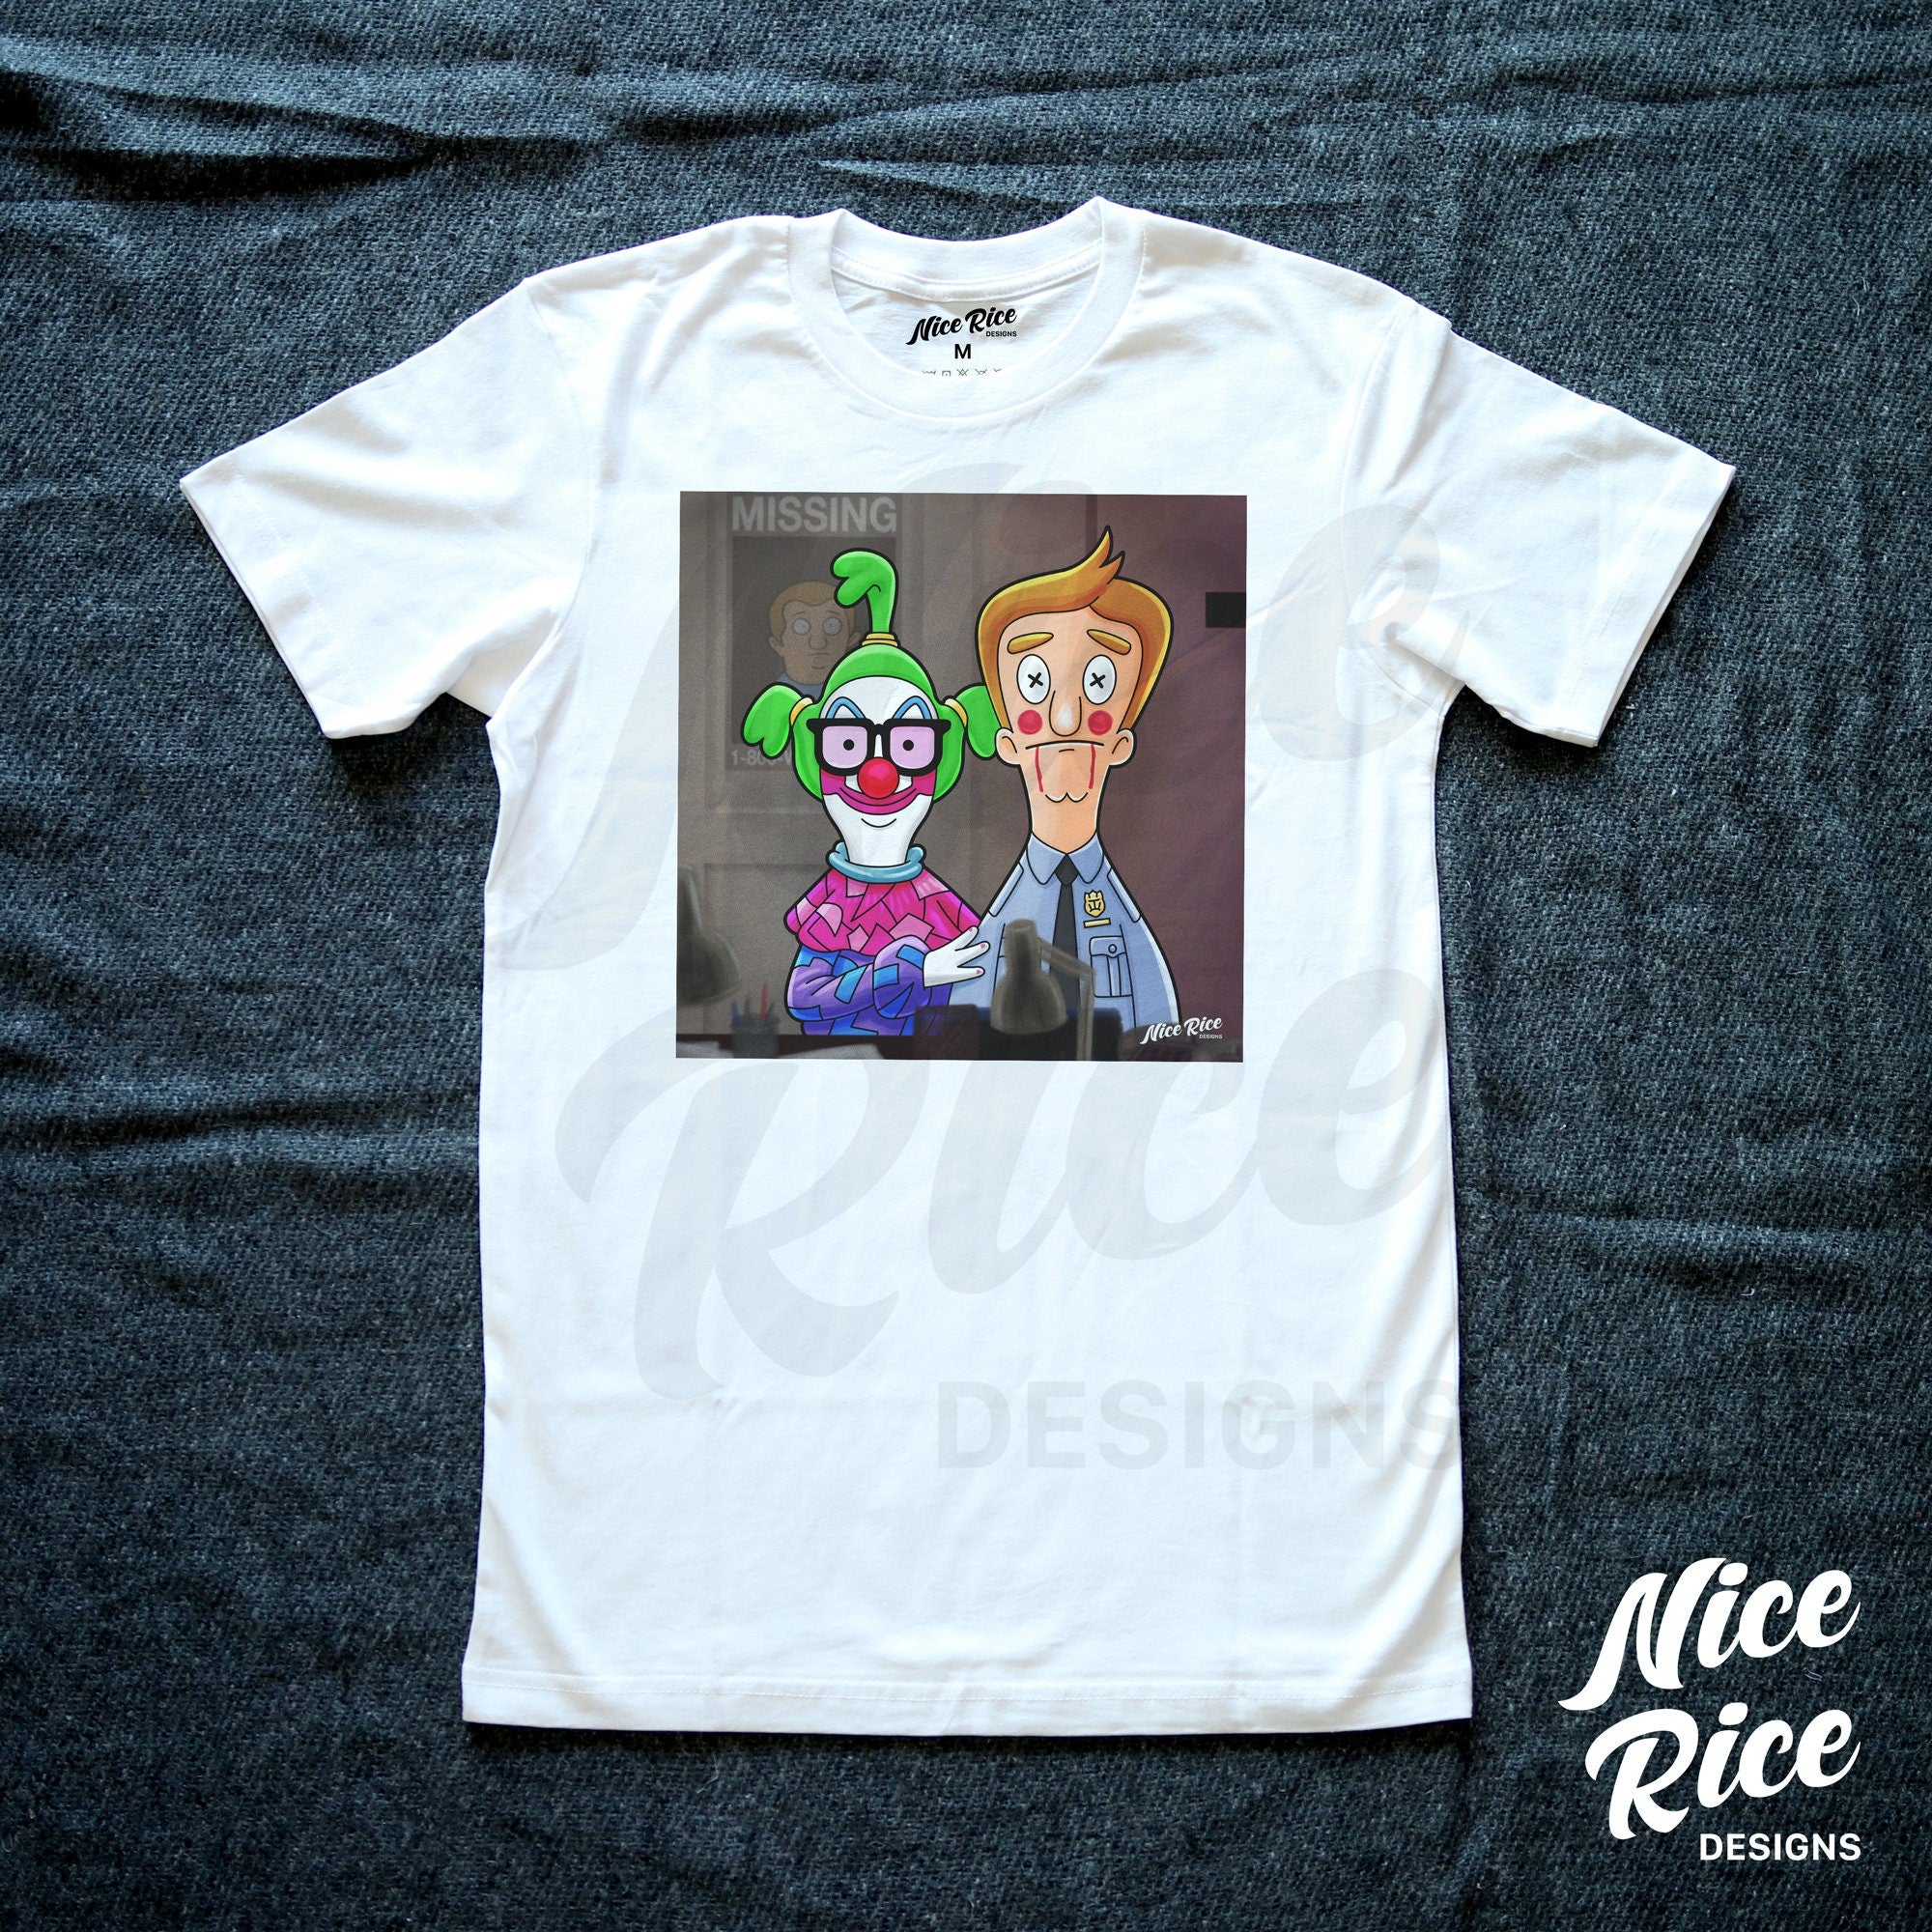 Klown Girl Shirt by Nice Rice Designs